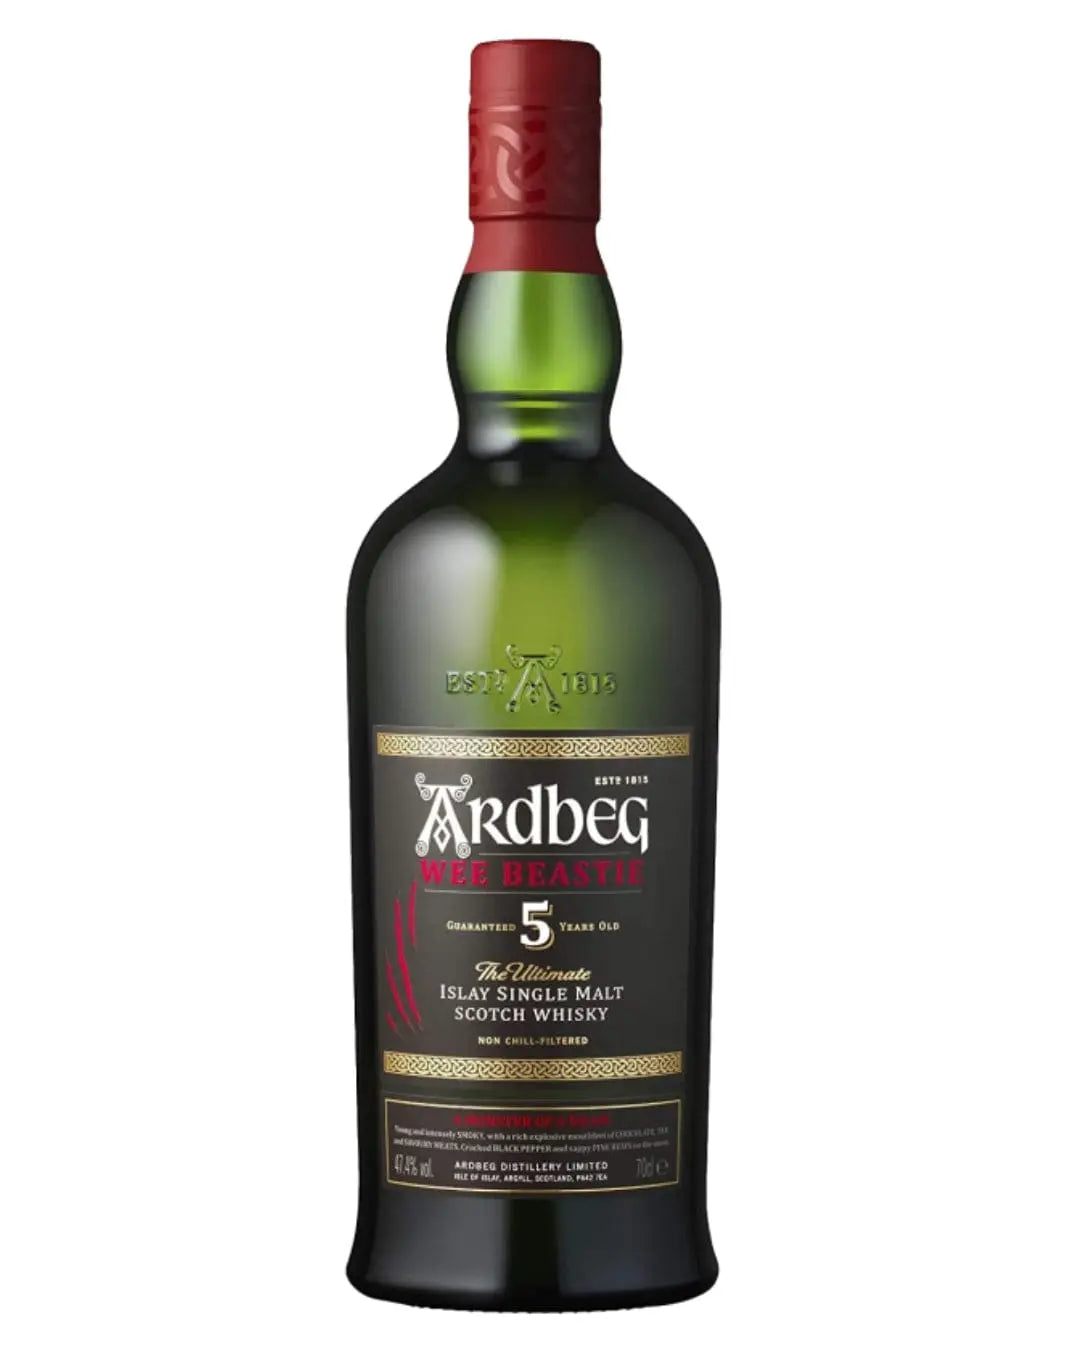 Ardbeg Wee Beastie 5 Year Old Single Malt Scotch Whisky, 70 cl Whisky